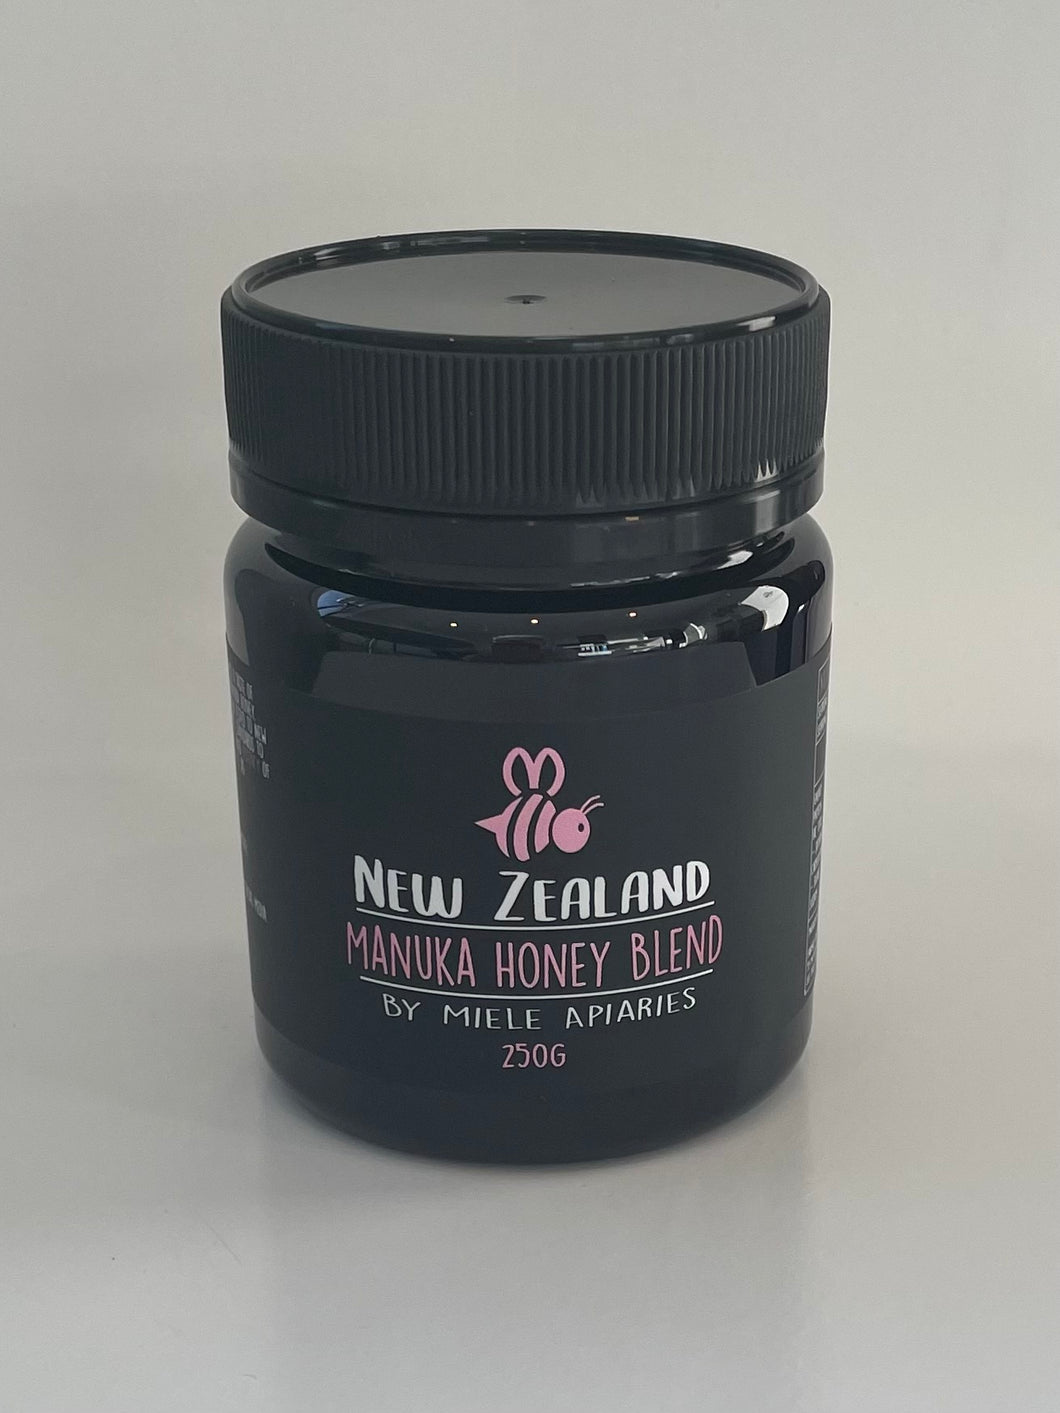 New Zealand Manuka Honey Blend